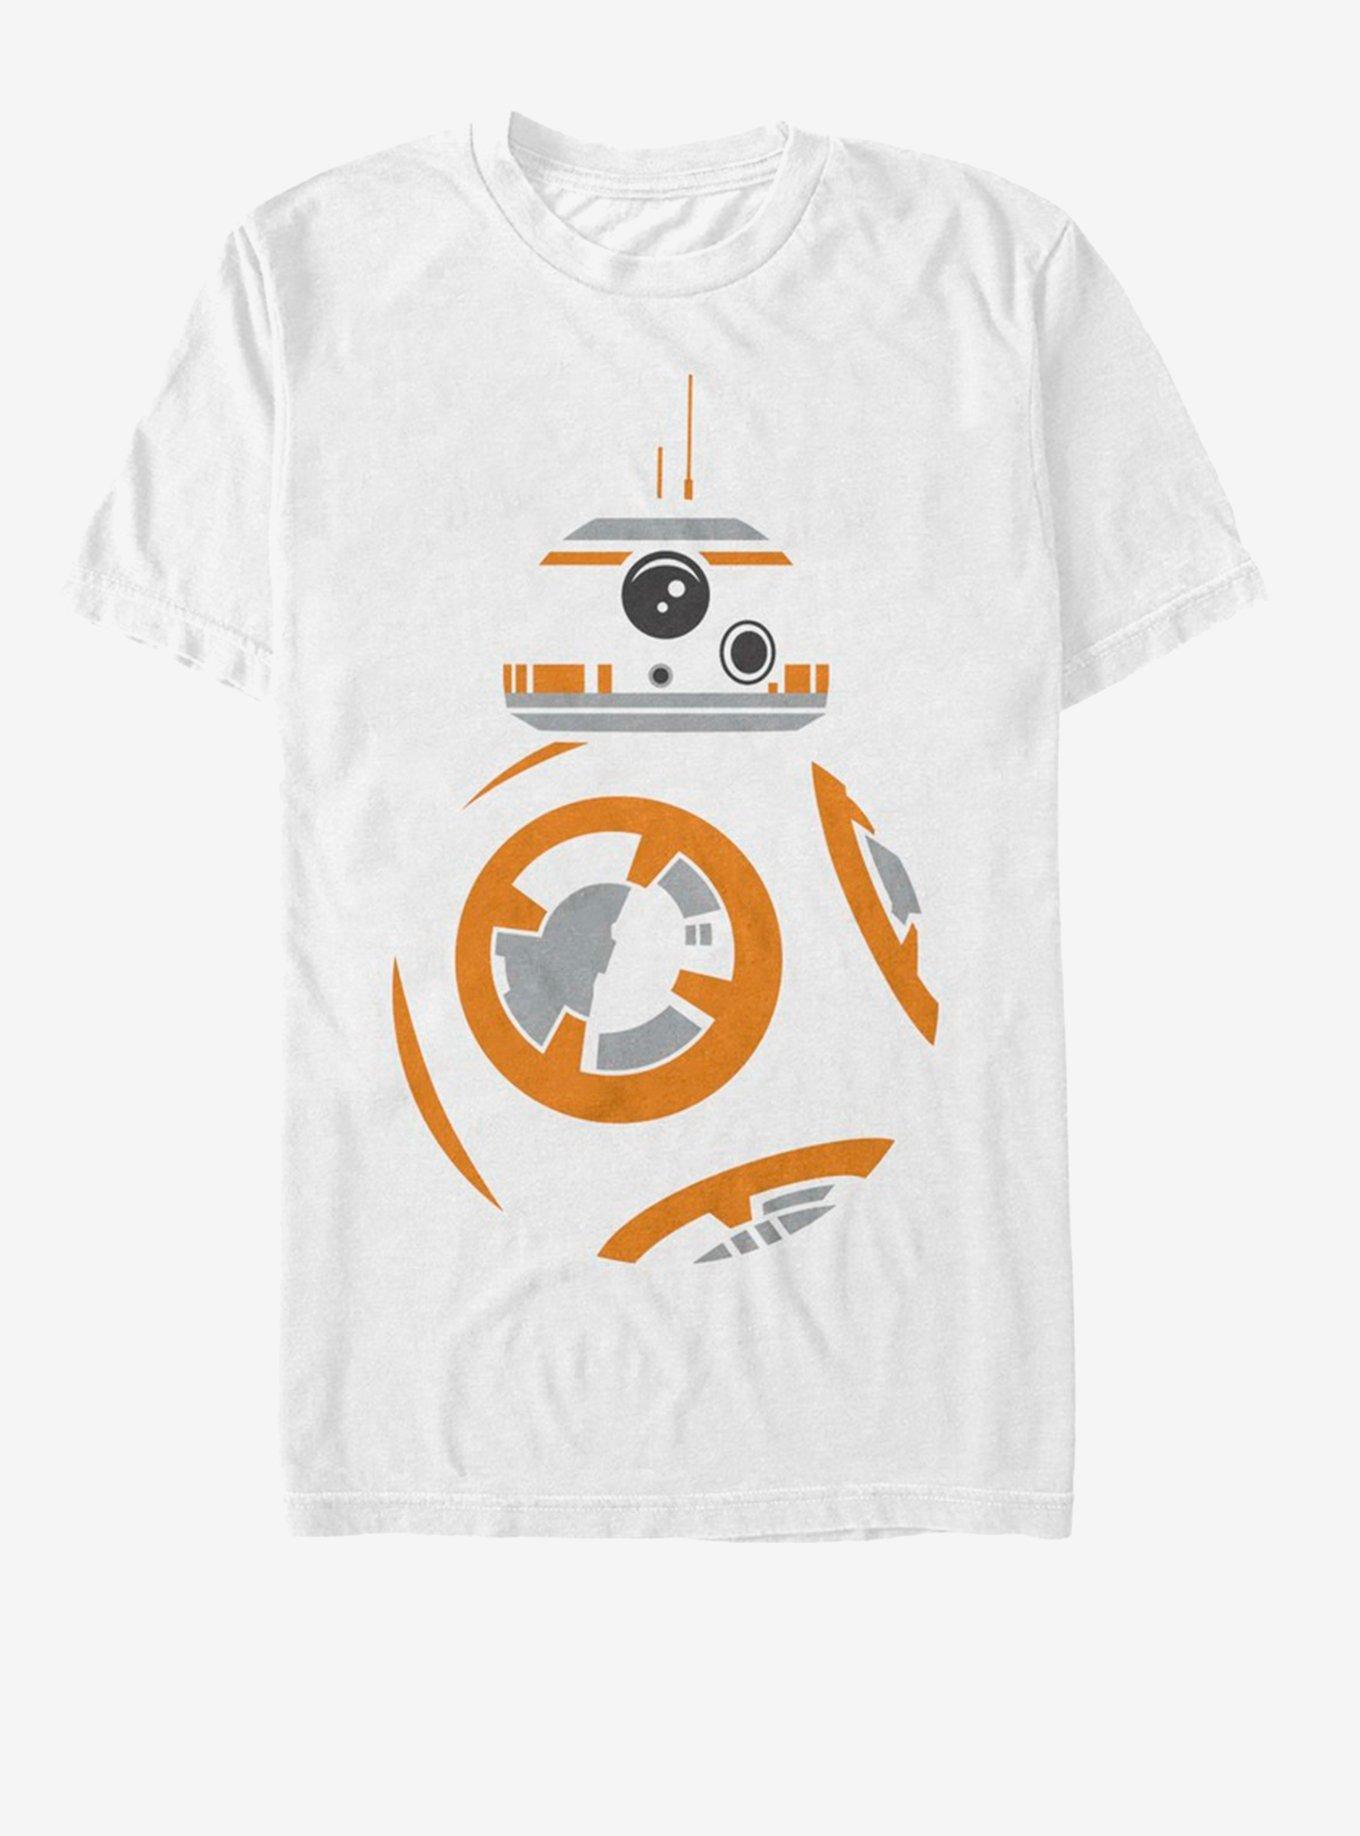 Star Wars: Episode VII The Force Awakens BB-8 Face T-Shirt, WHITE, hi-res